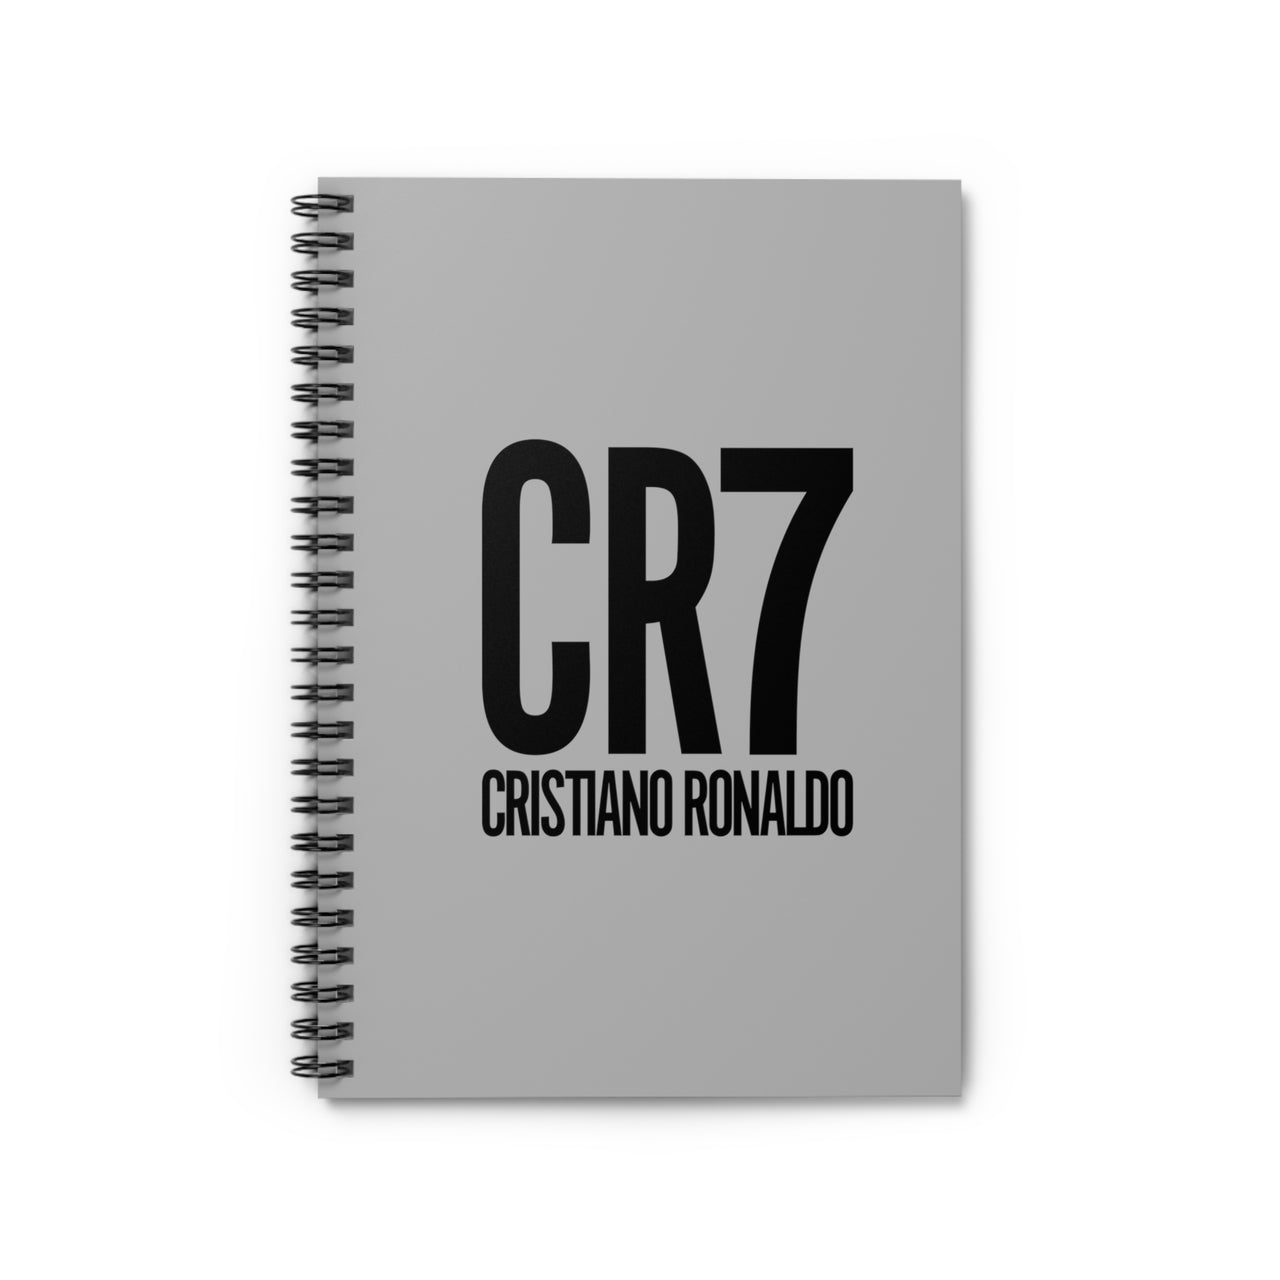 Cristiano Ronaldo Spiral Notebook - Ruled Line